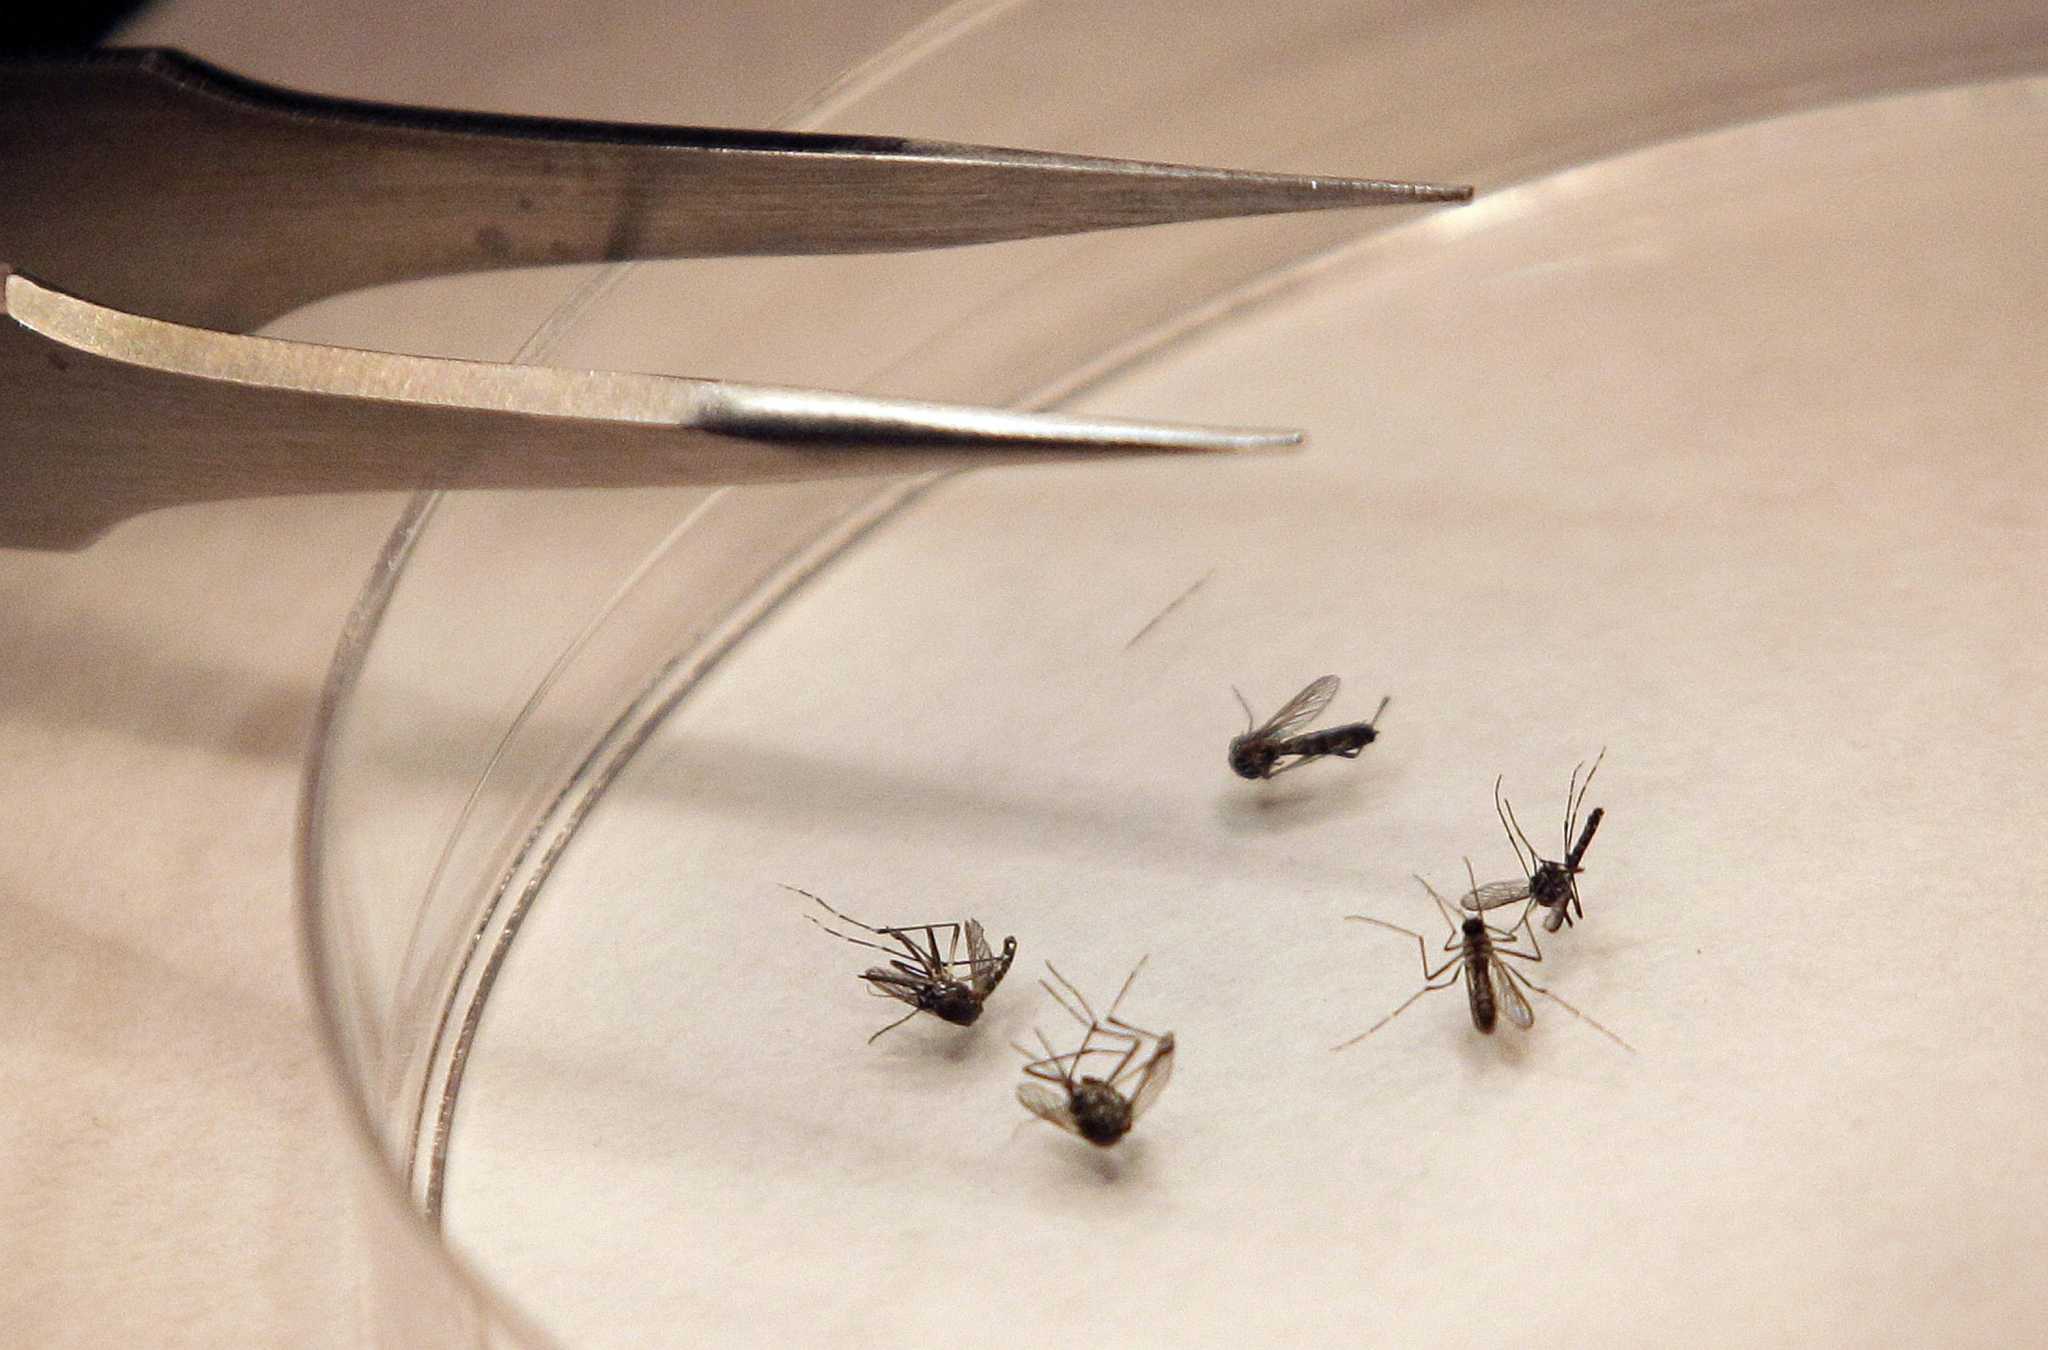 California registra la primera muerte por virus del Nilo Occidental en 2021